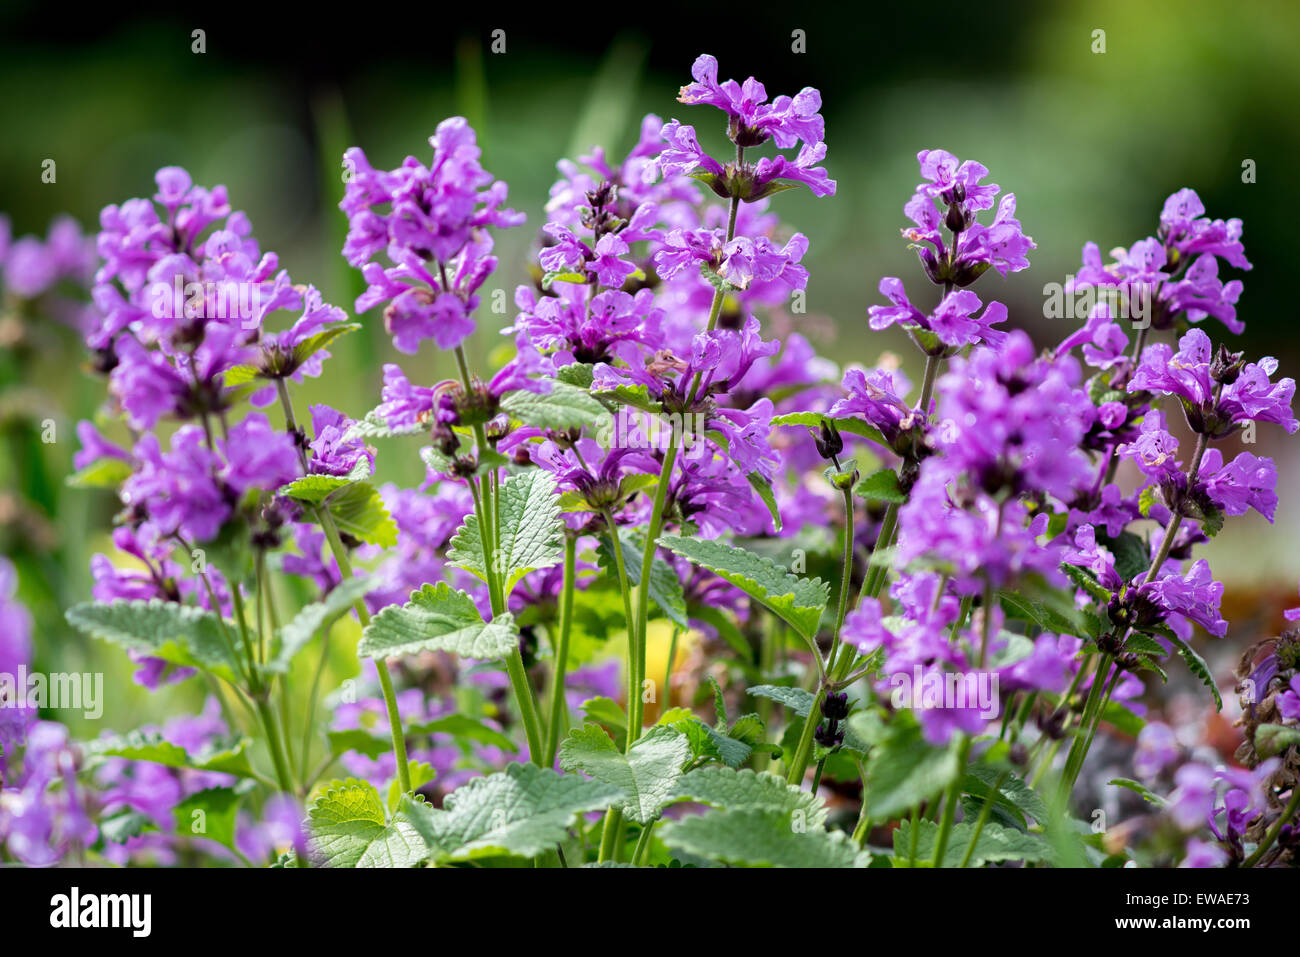 Stachys macrantha Superba purple flowers close up Stock Photo